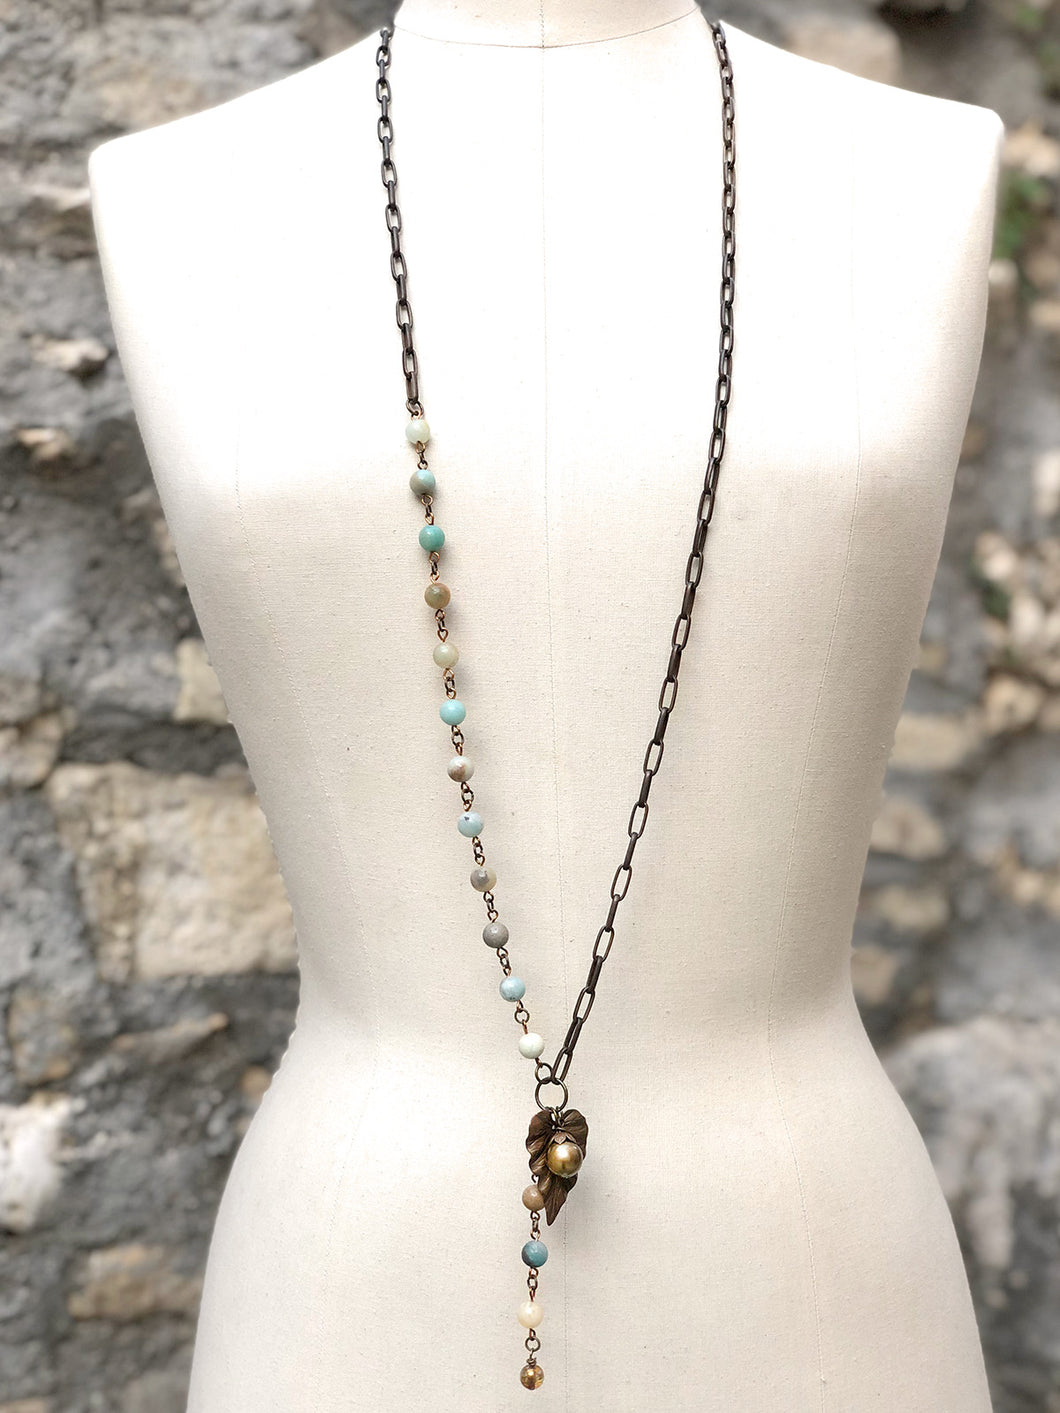 Bijoux Byzantium Necklace - Amazonite and Swarovski Pearls